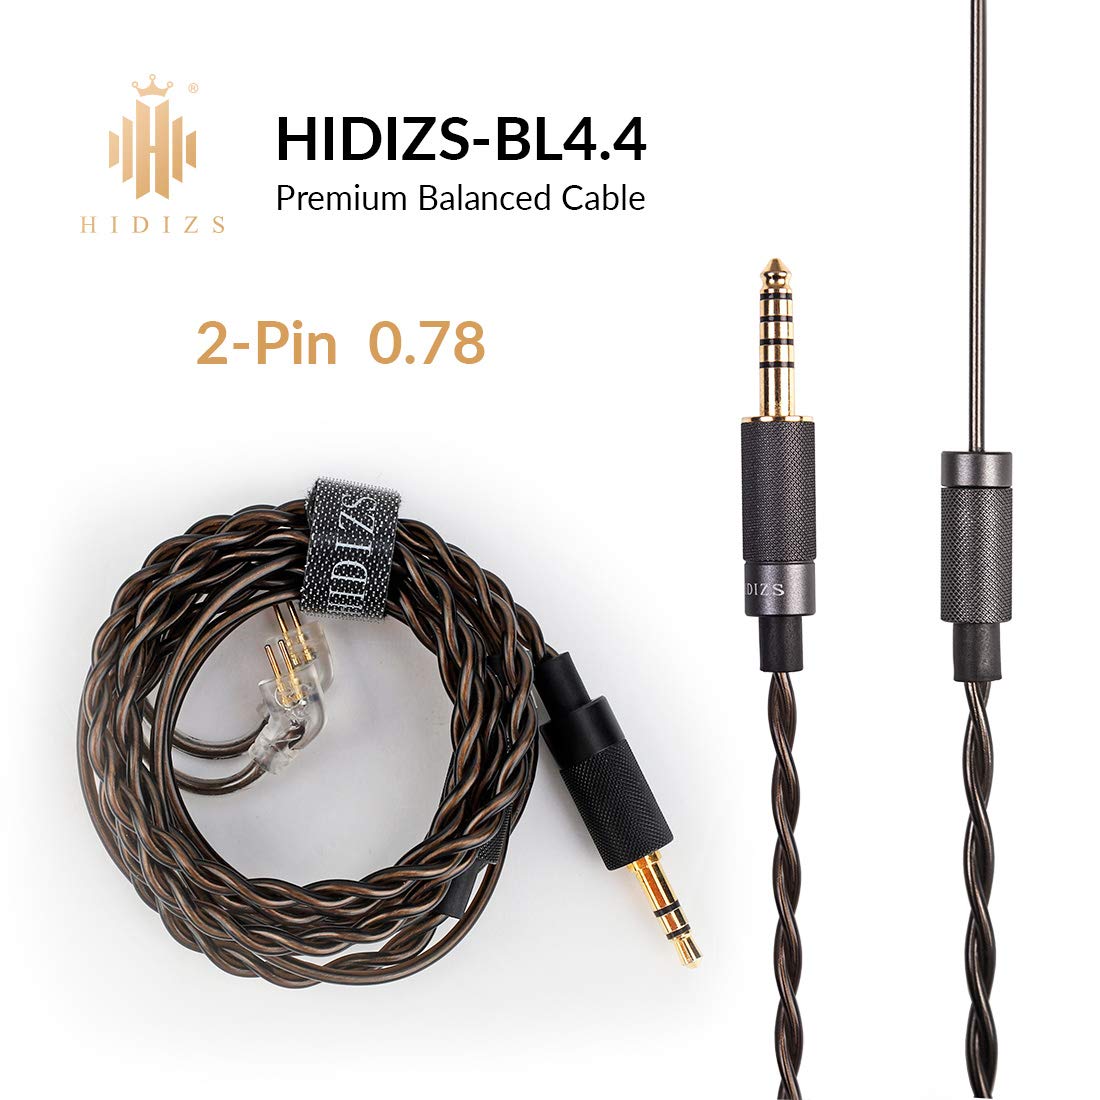 Hidizs 2-Pin Upgrade Cable